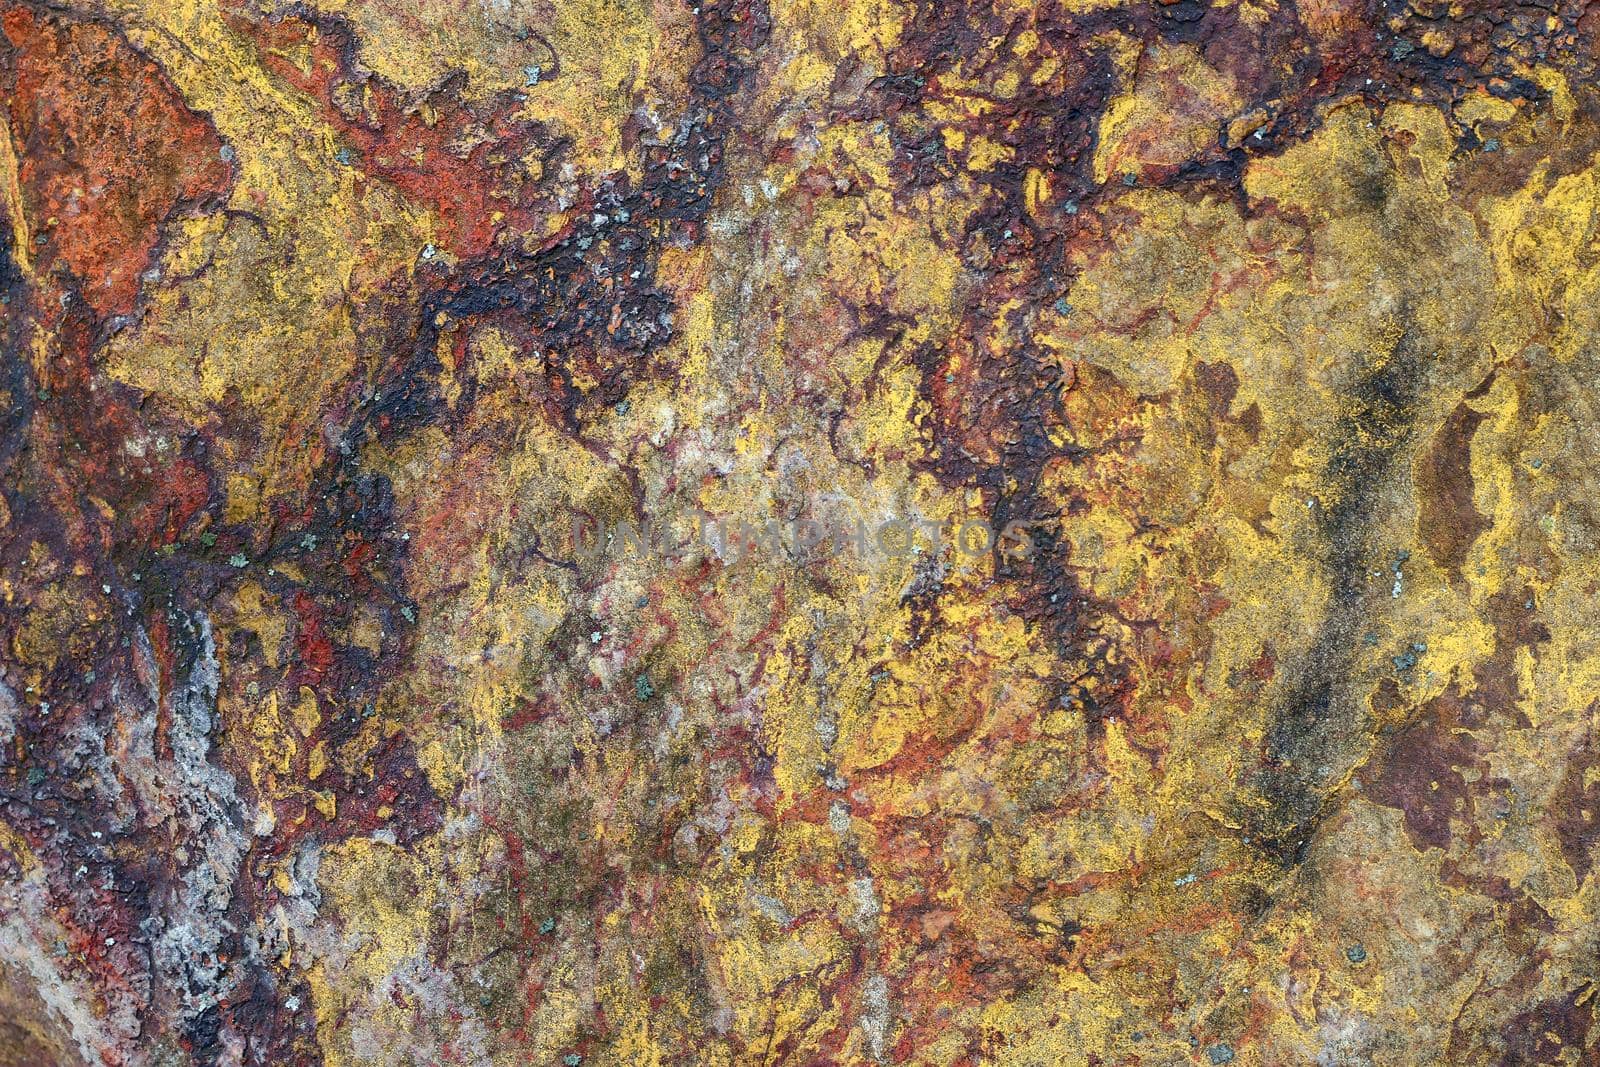 Detail of the surface of the quartz rock - quartzite